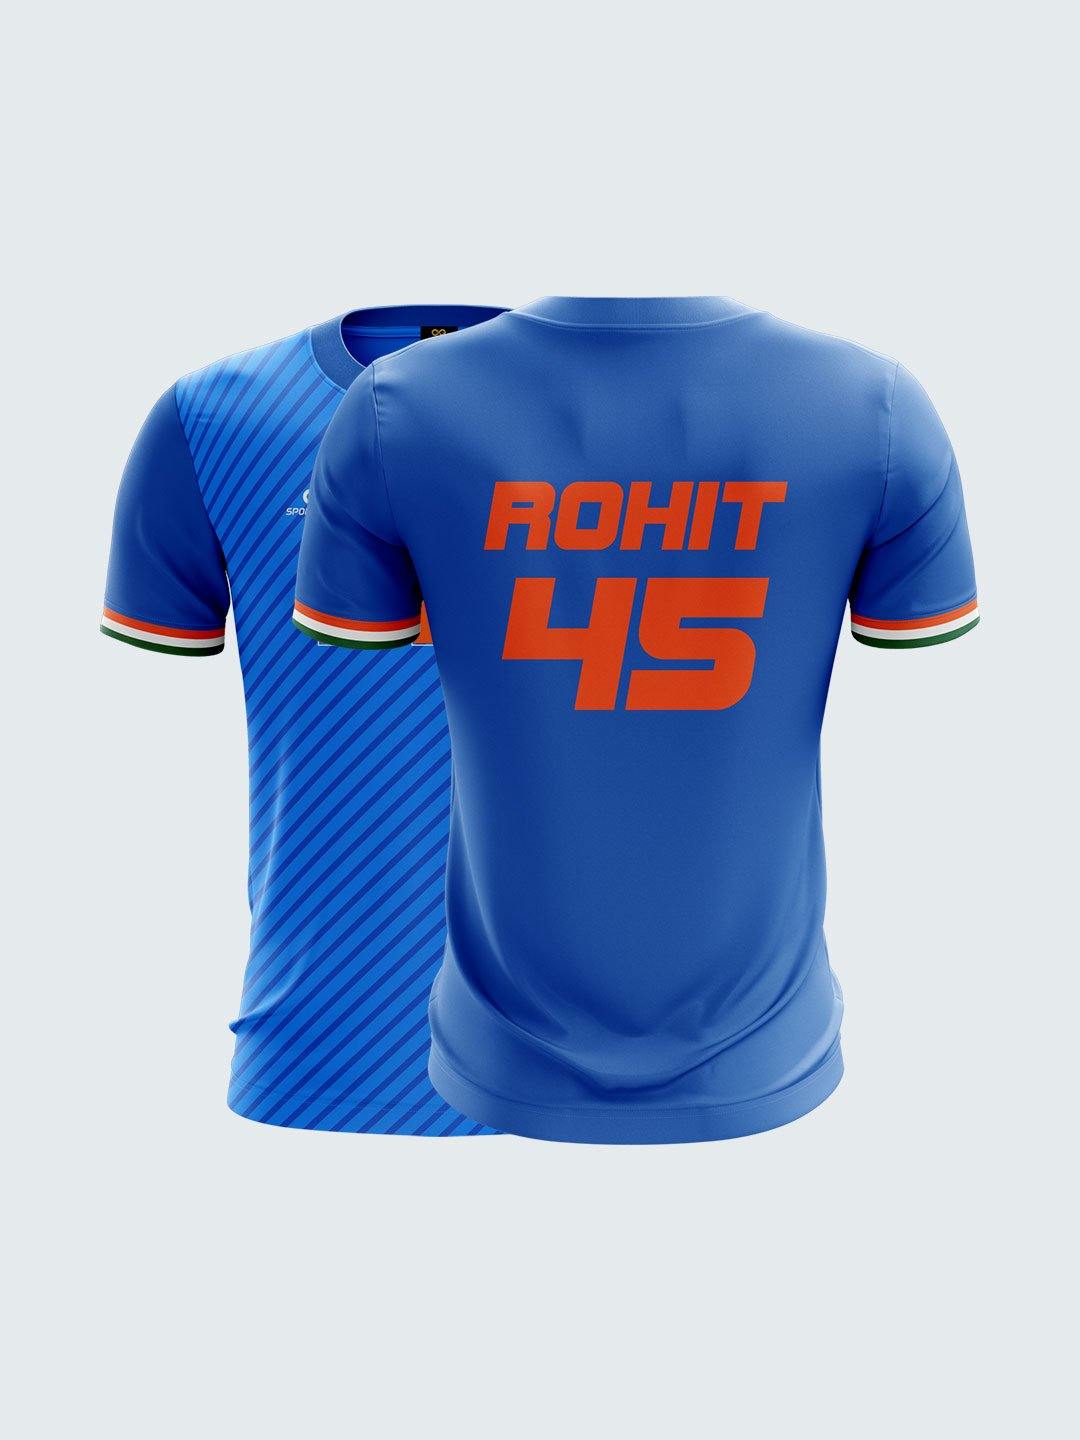 rohit sharma jersey buy online